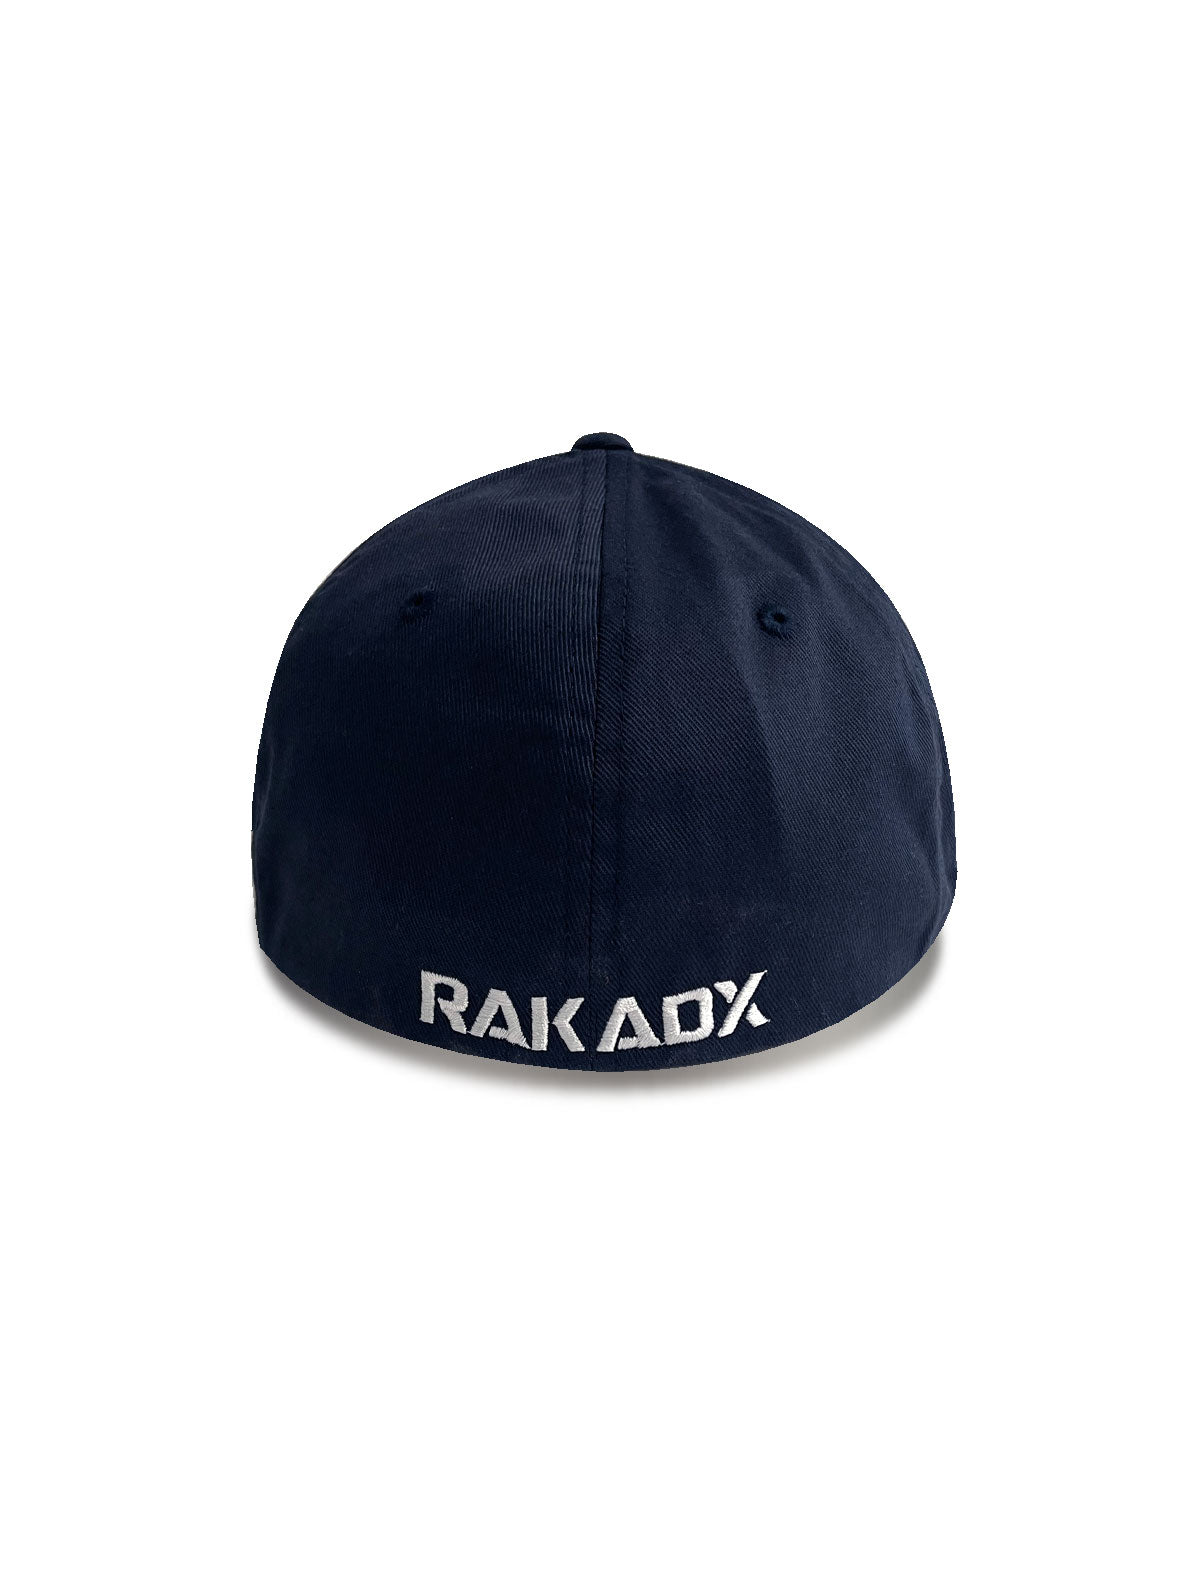 Eastwood Navy Flex Hat (Adult S to XXL Sizes)